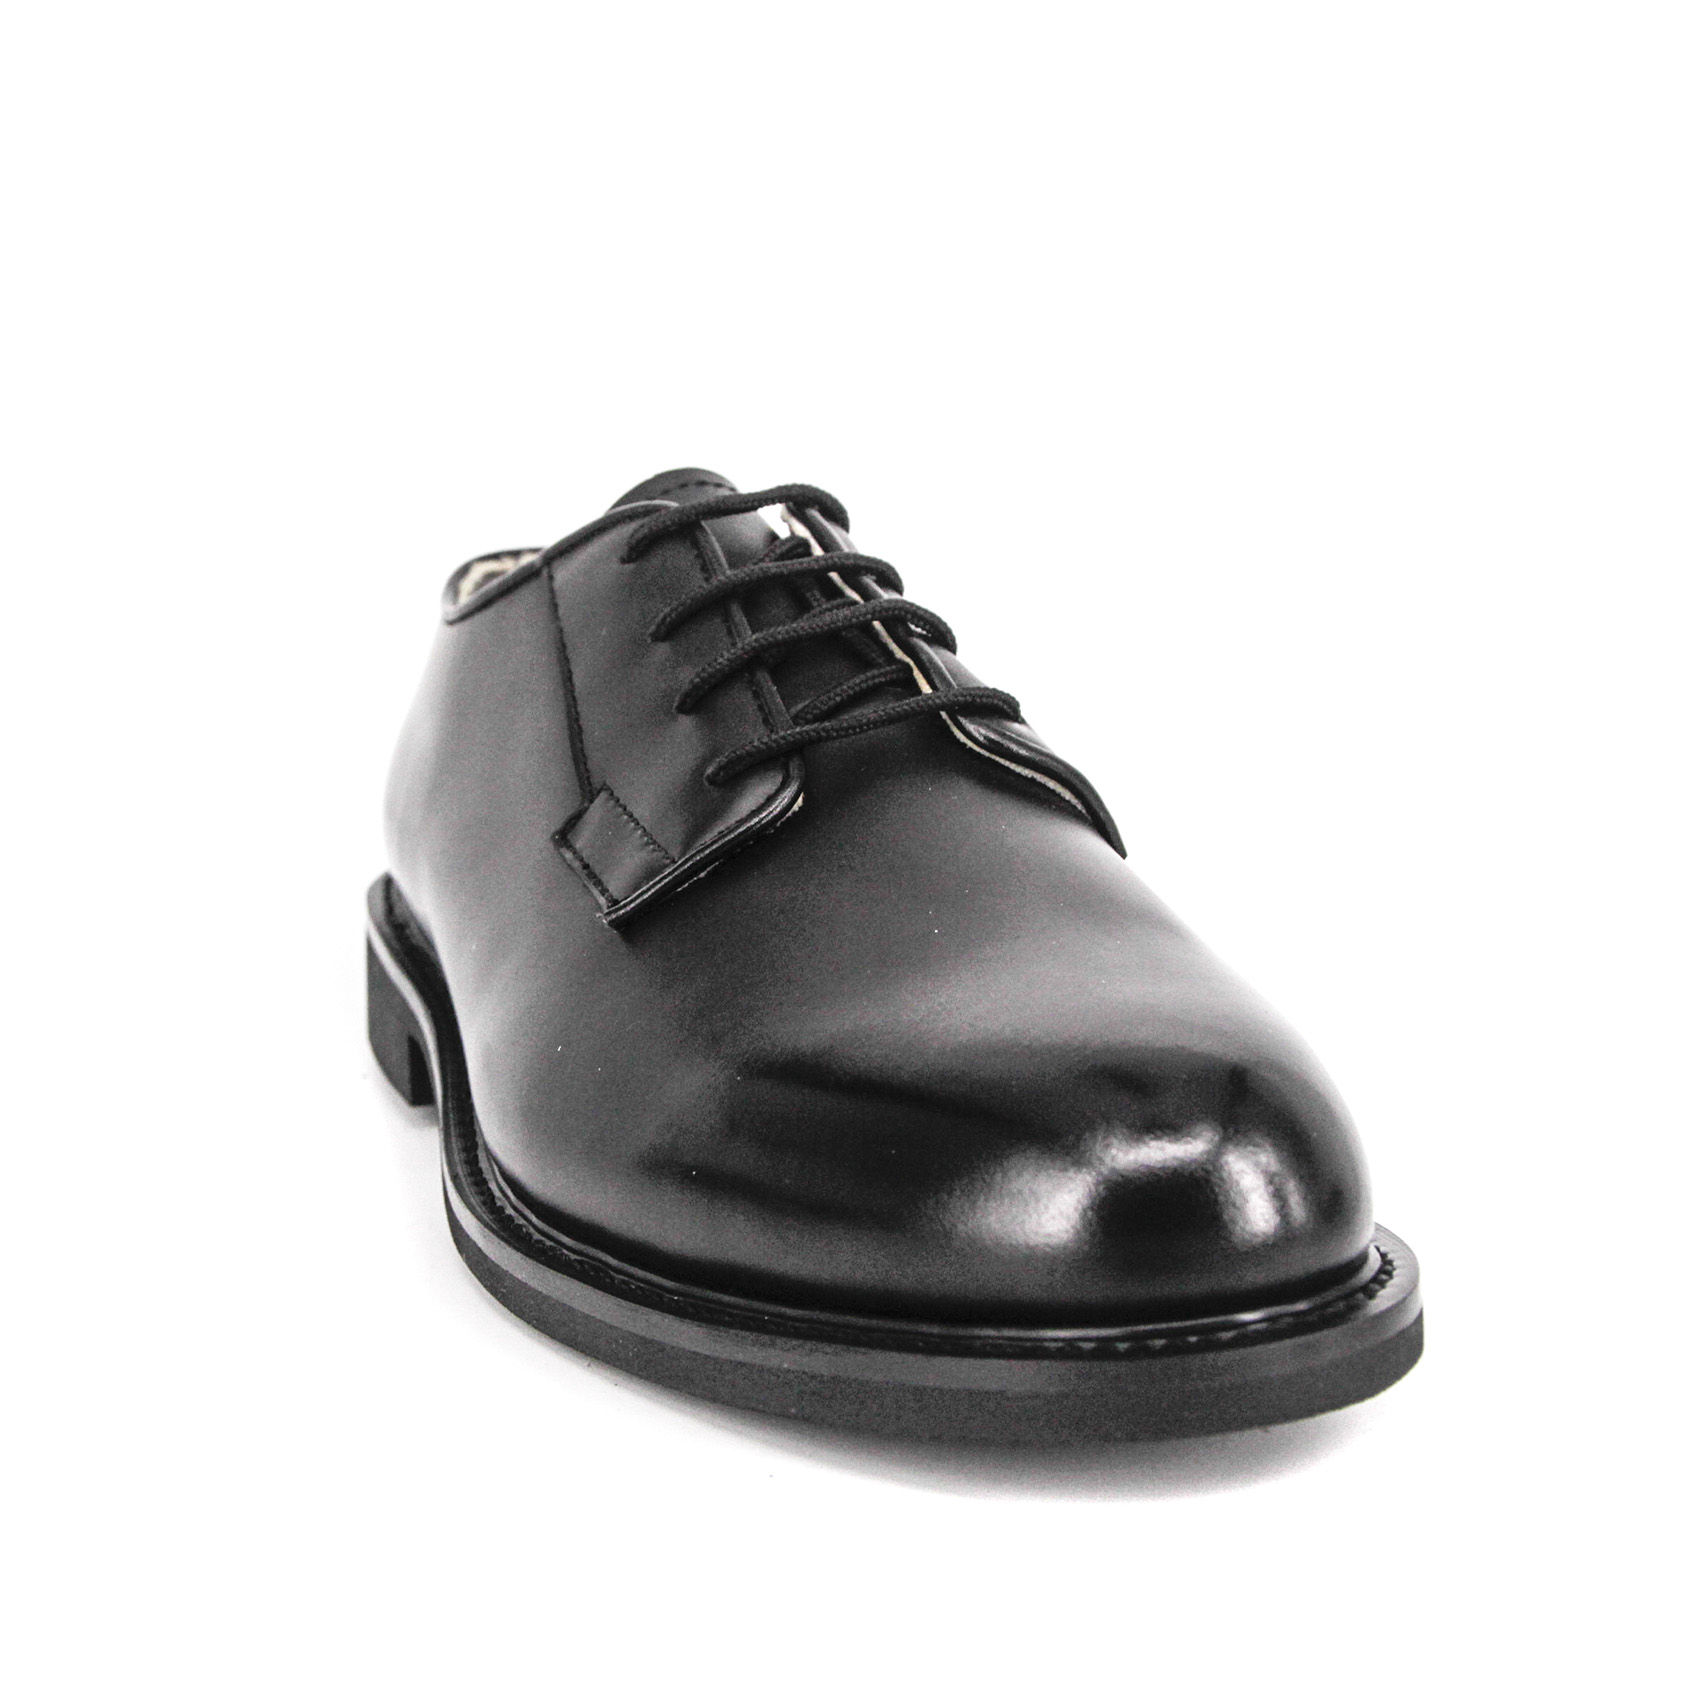 MILFORCE کسٹم تازہ ترین سٹائل گرم، شہوت انگیز فروخت بزنس آفس آکسفورڈ جوتے مردوں کے کپڑے جوتے